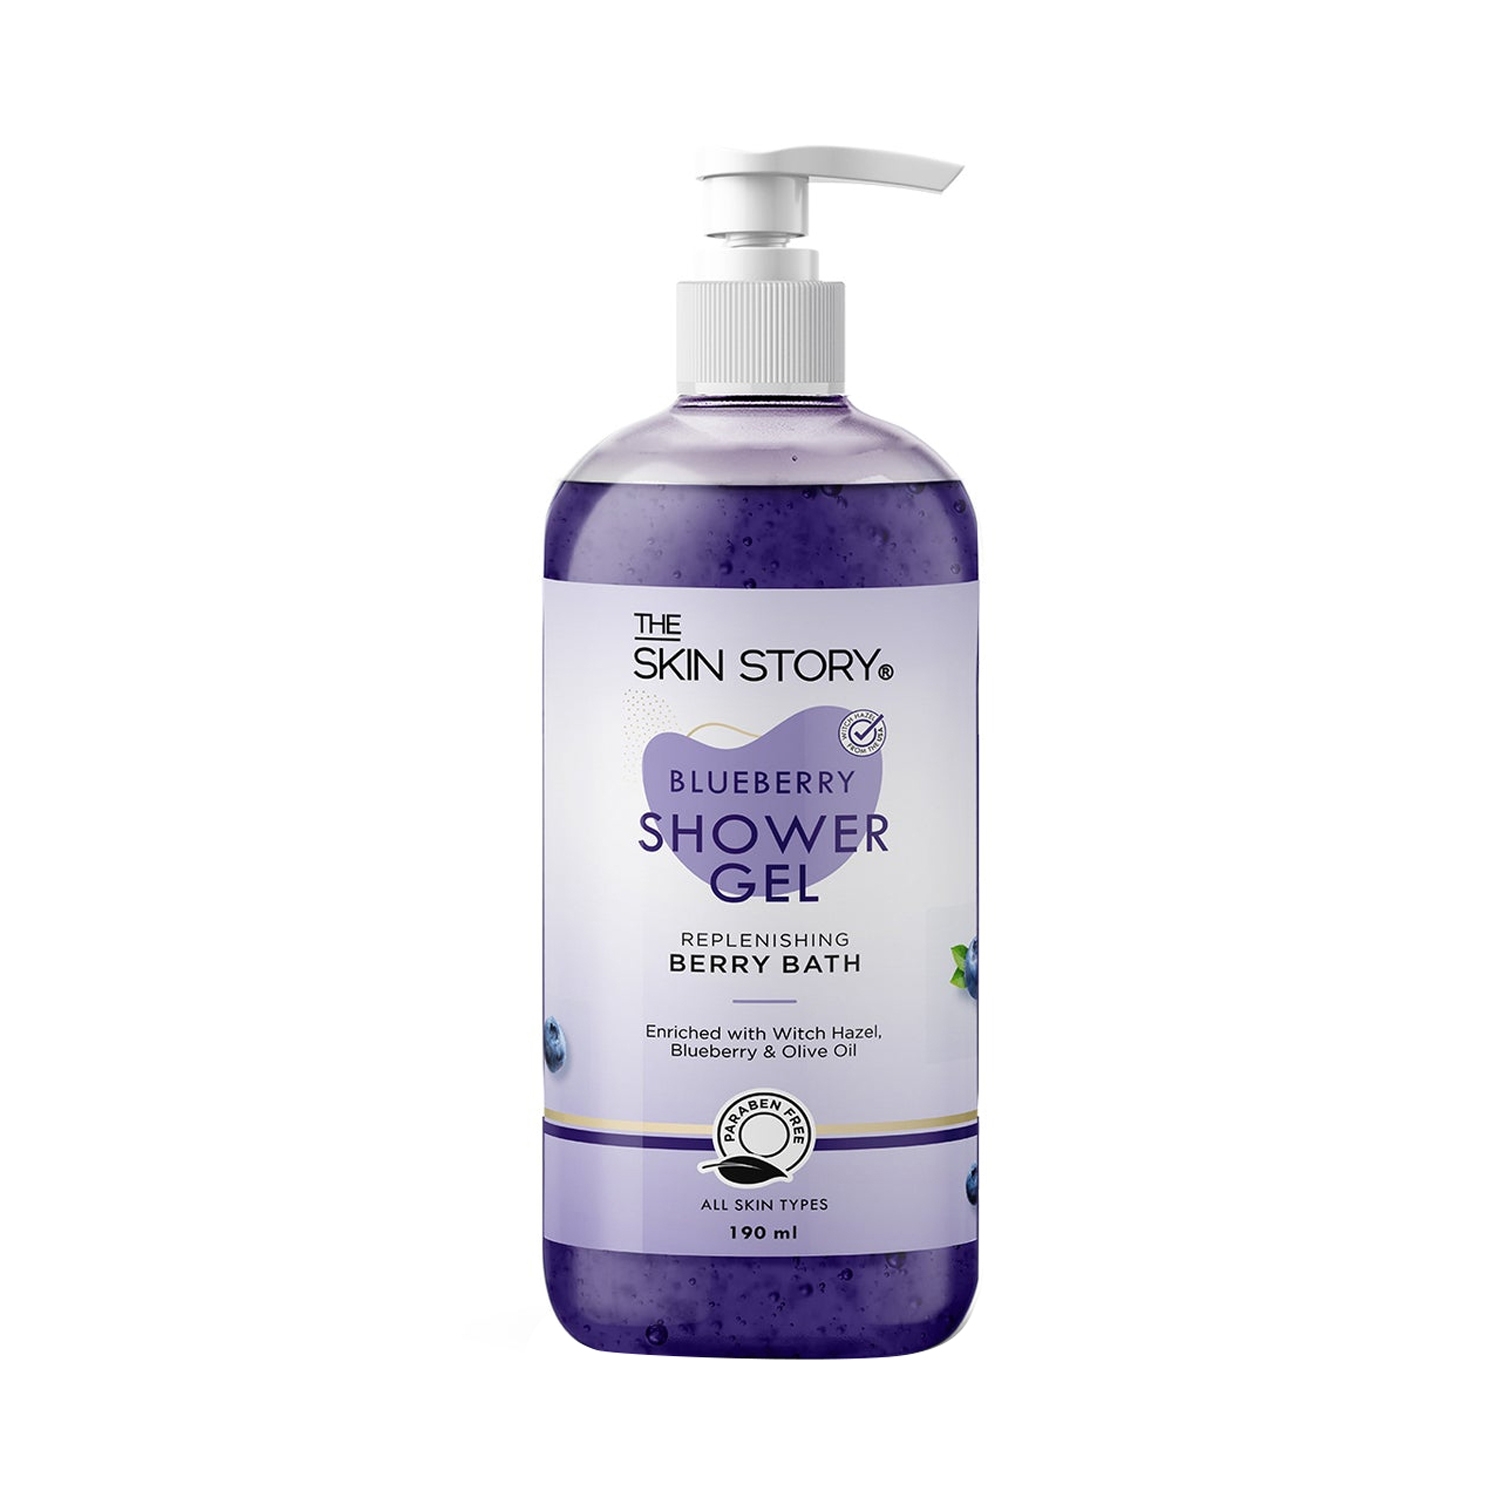 The Skin Story Refreshing Blueberry Shower Gel (190ml)